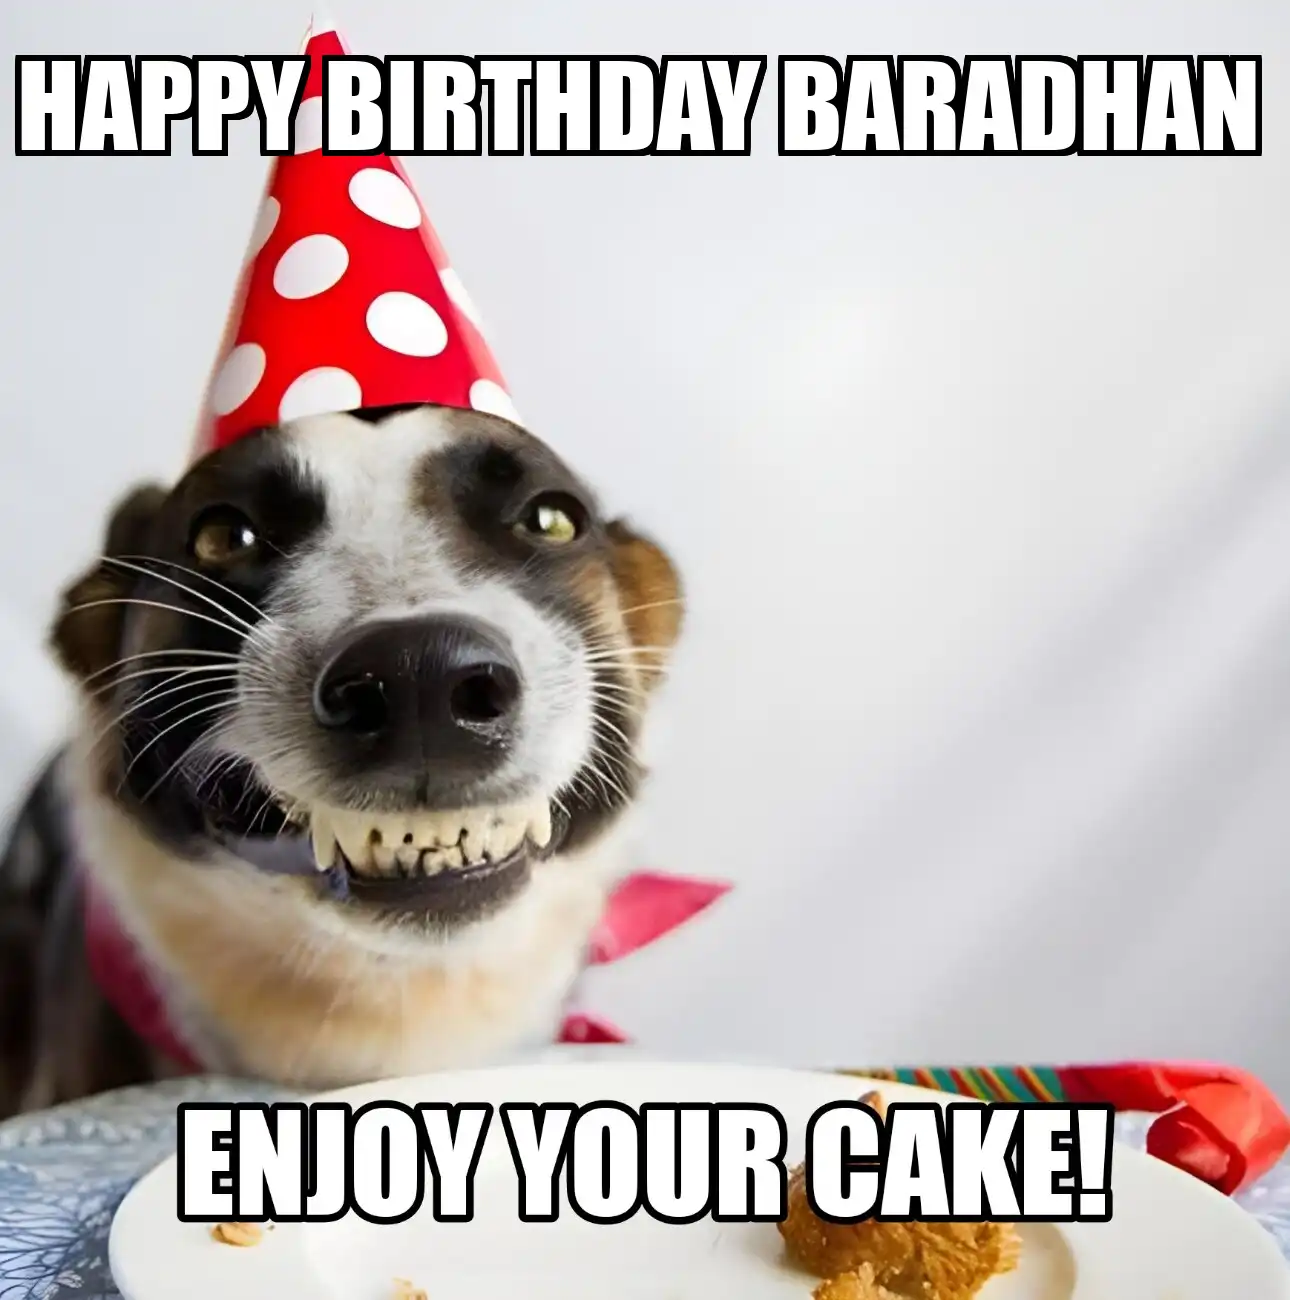 Happy Birthday Baradhan Enjoy Your Cake Dog Meme